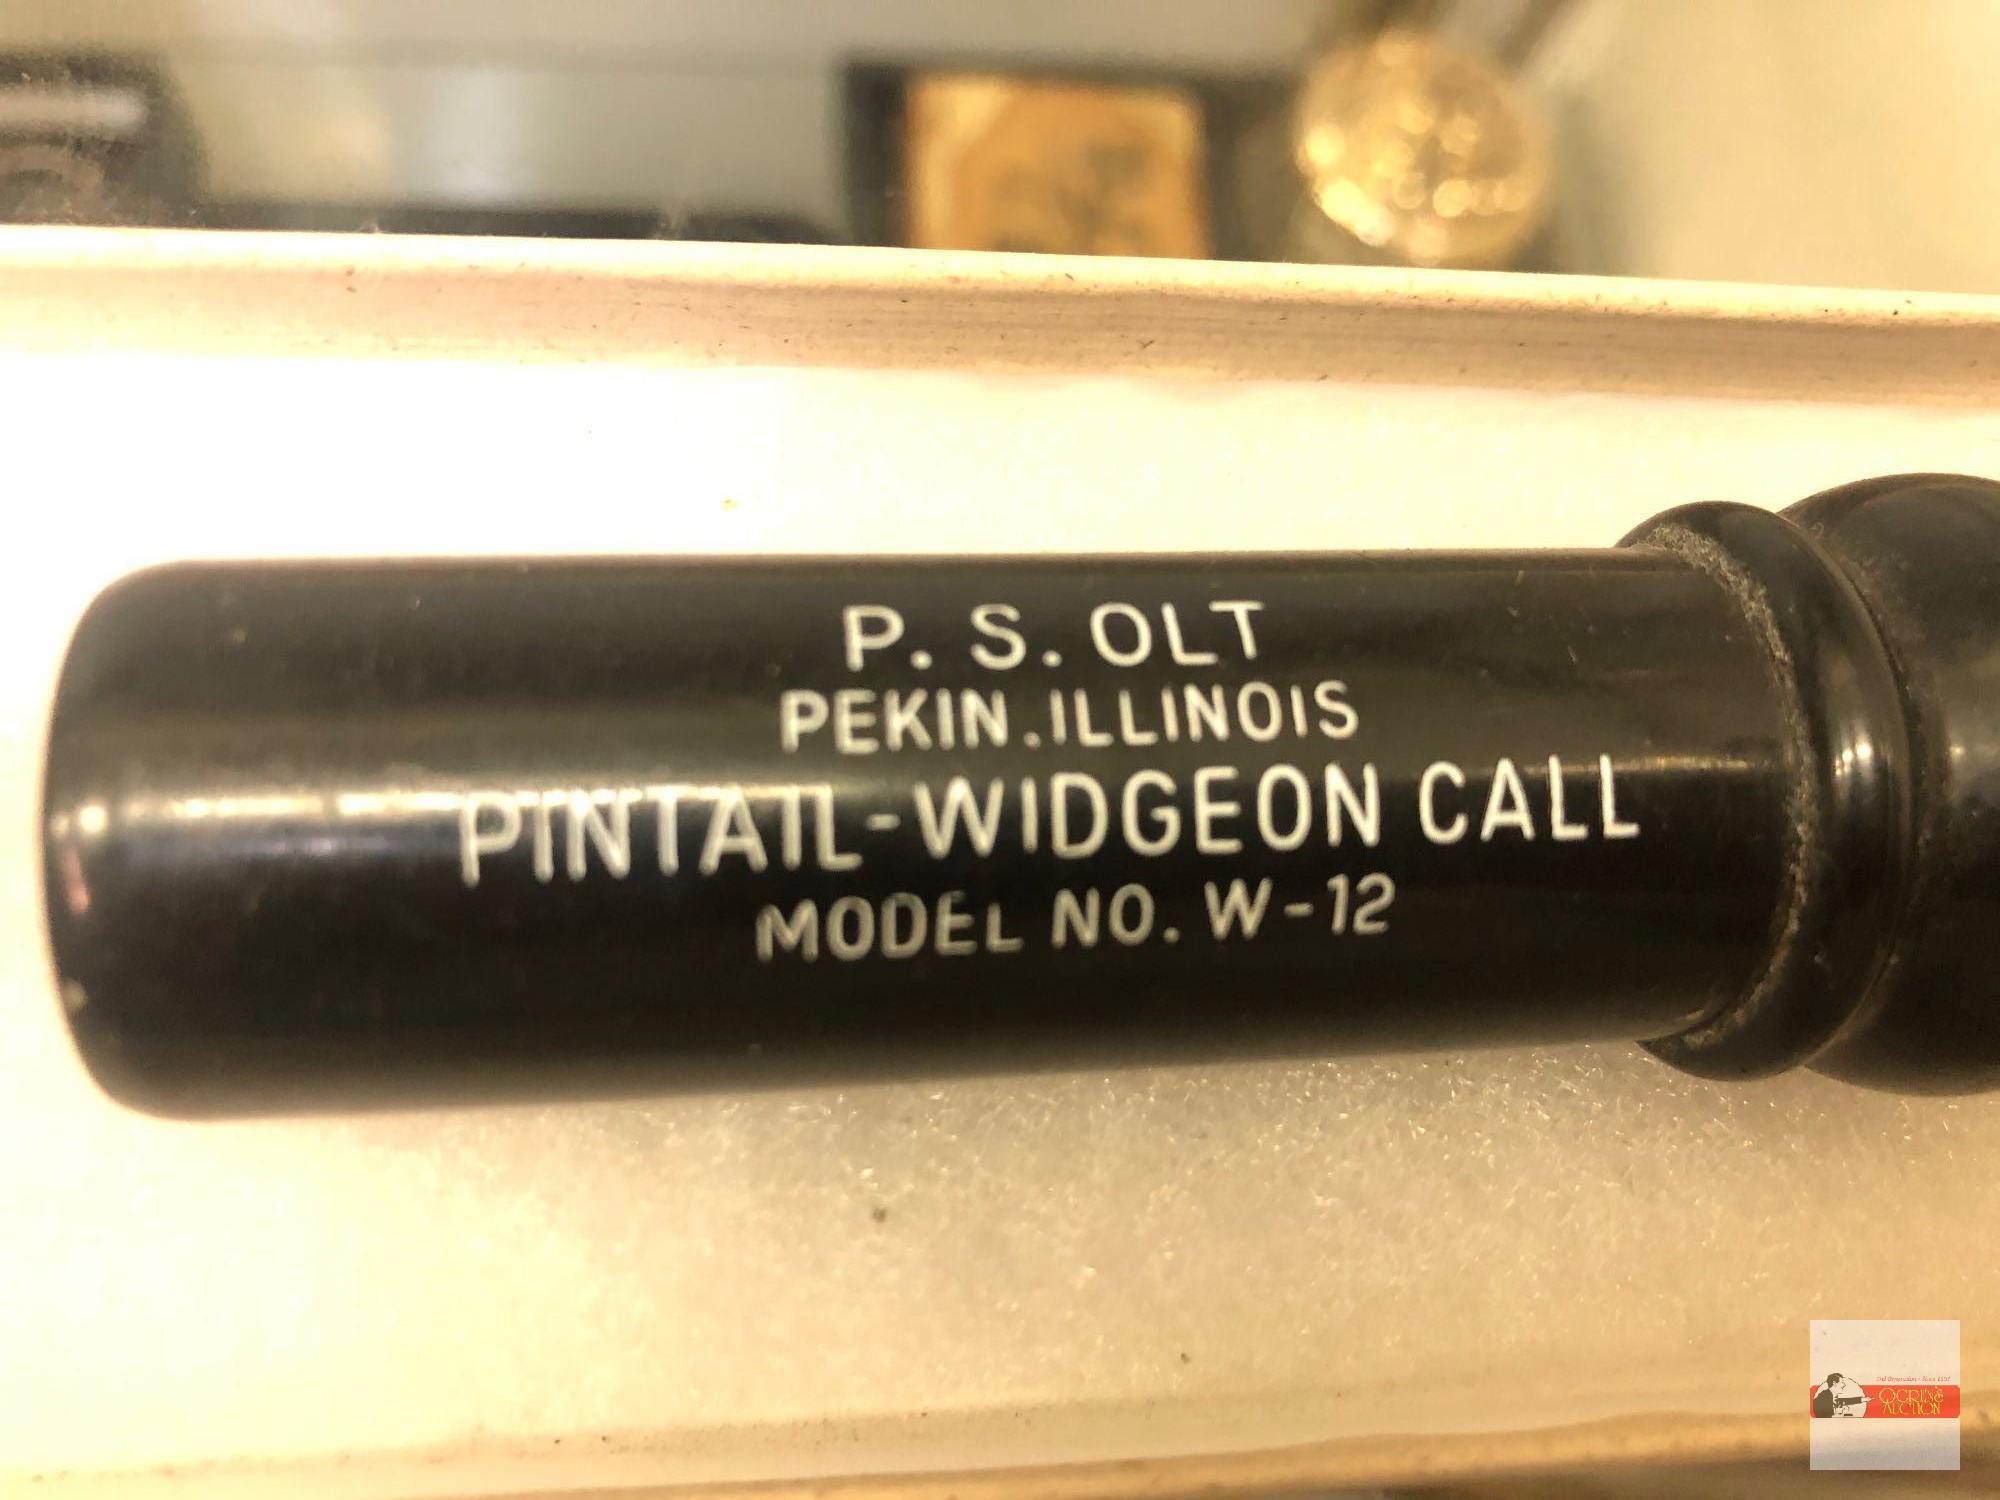 Duck Call - P.S. Olt Pekin, Il, Pintail-Widgeon call Model W-12, 4.75"